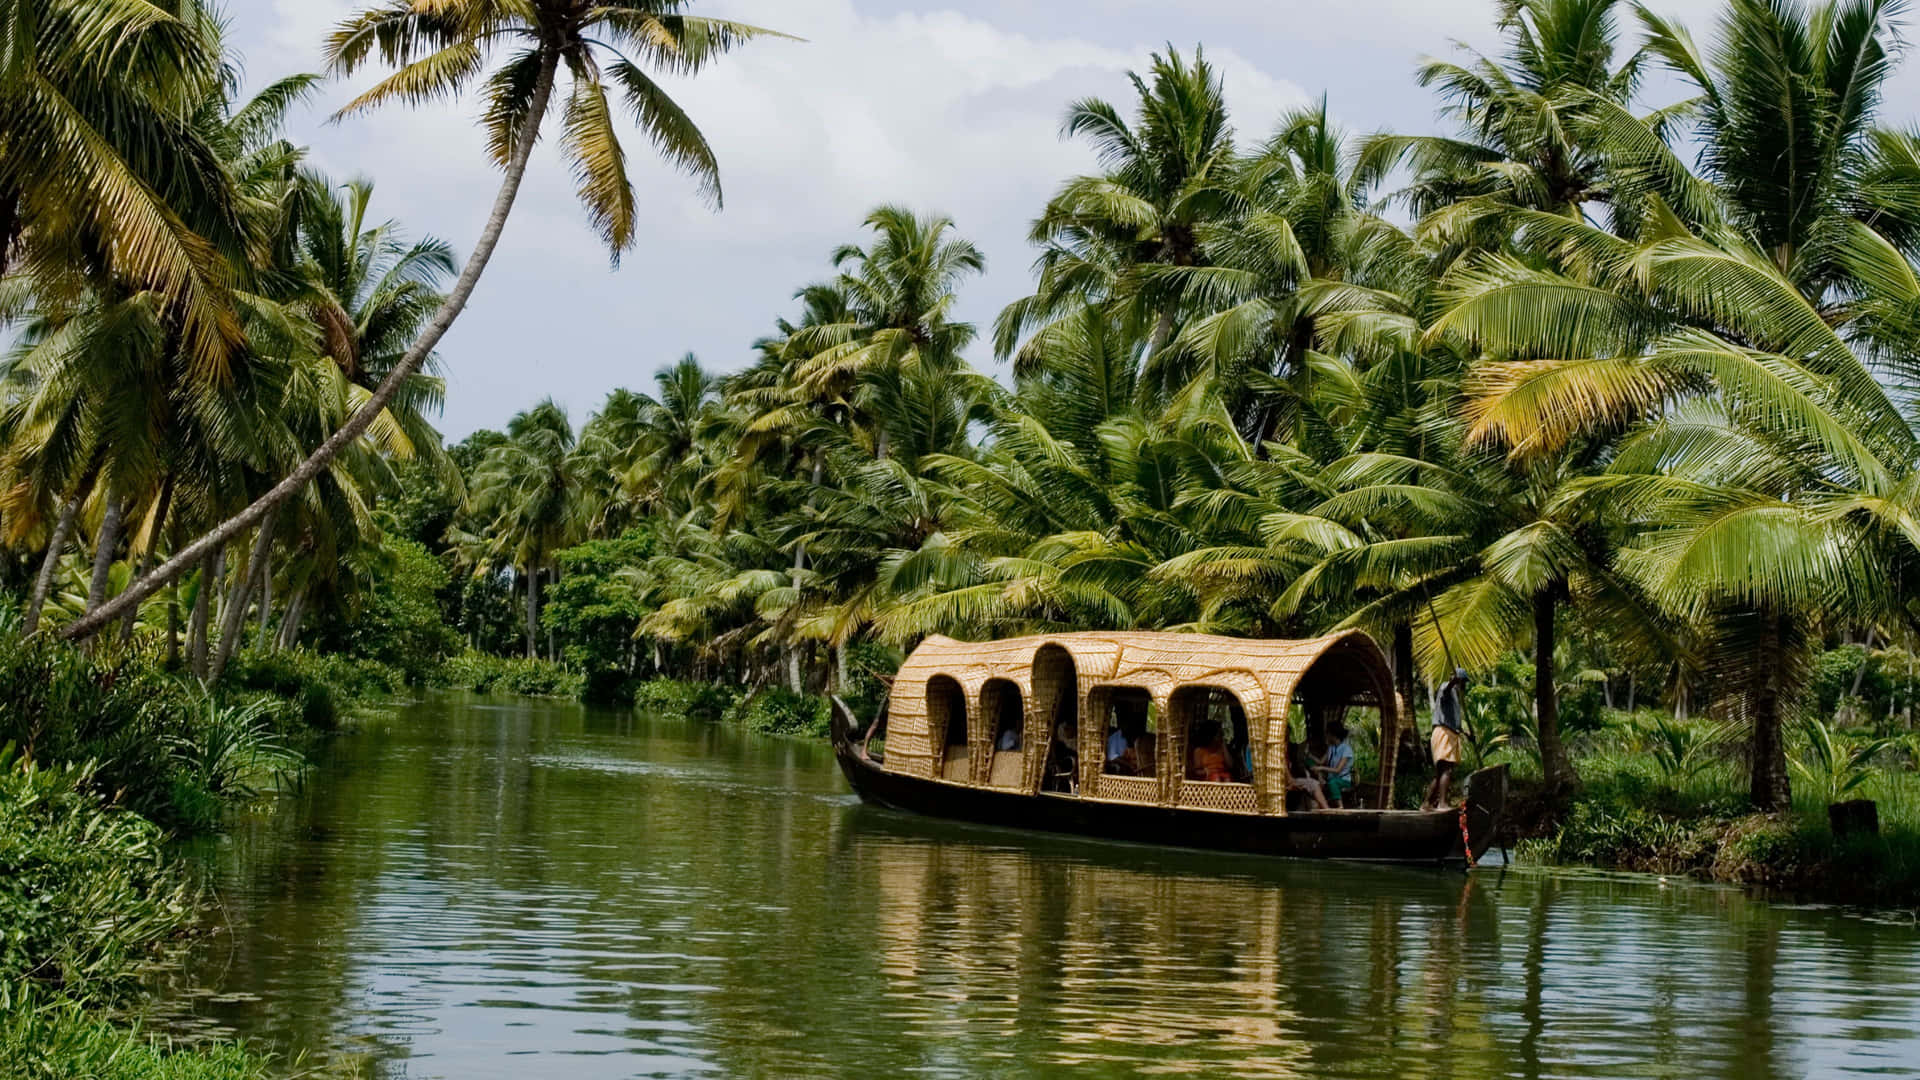 Enjoy the tranquil beauty of Kerala